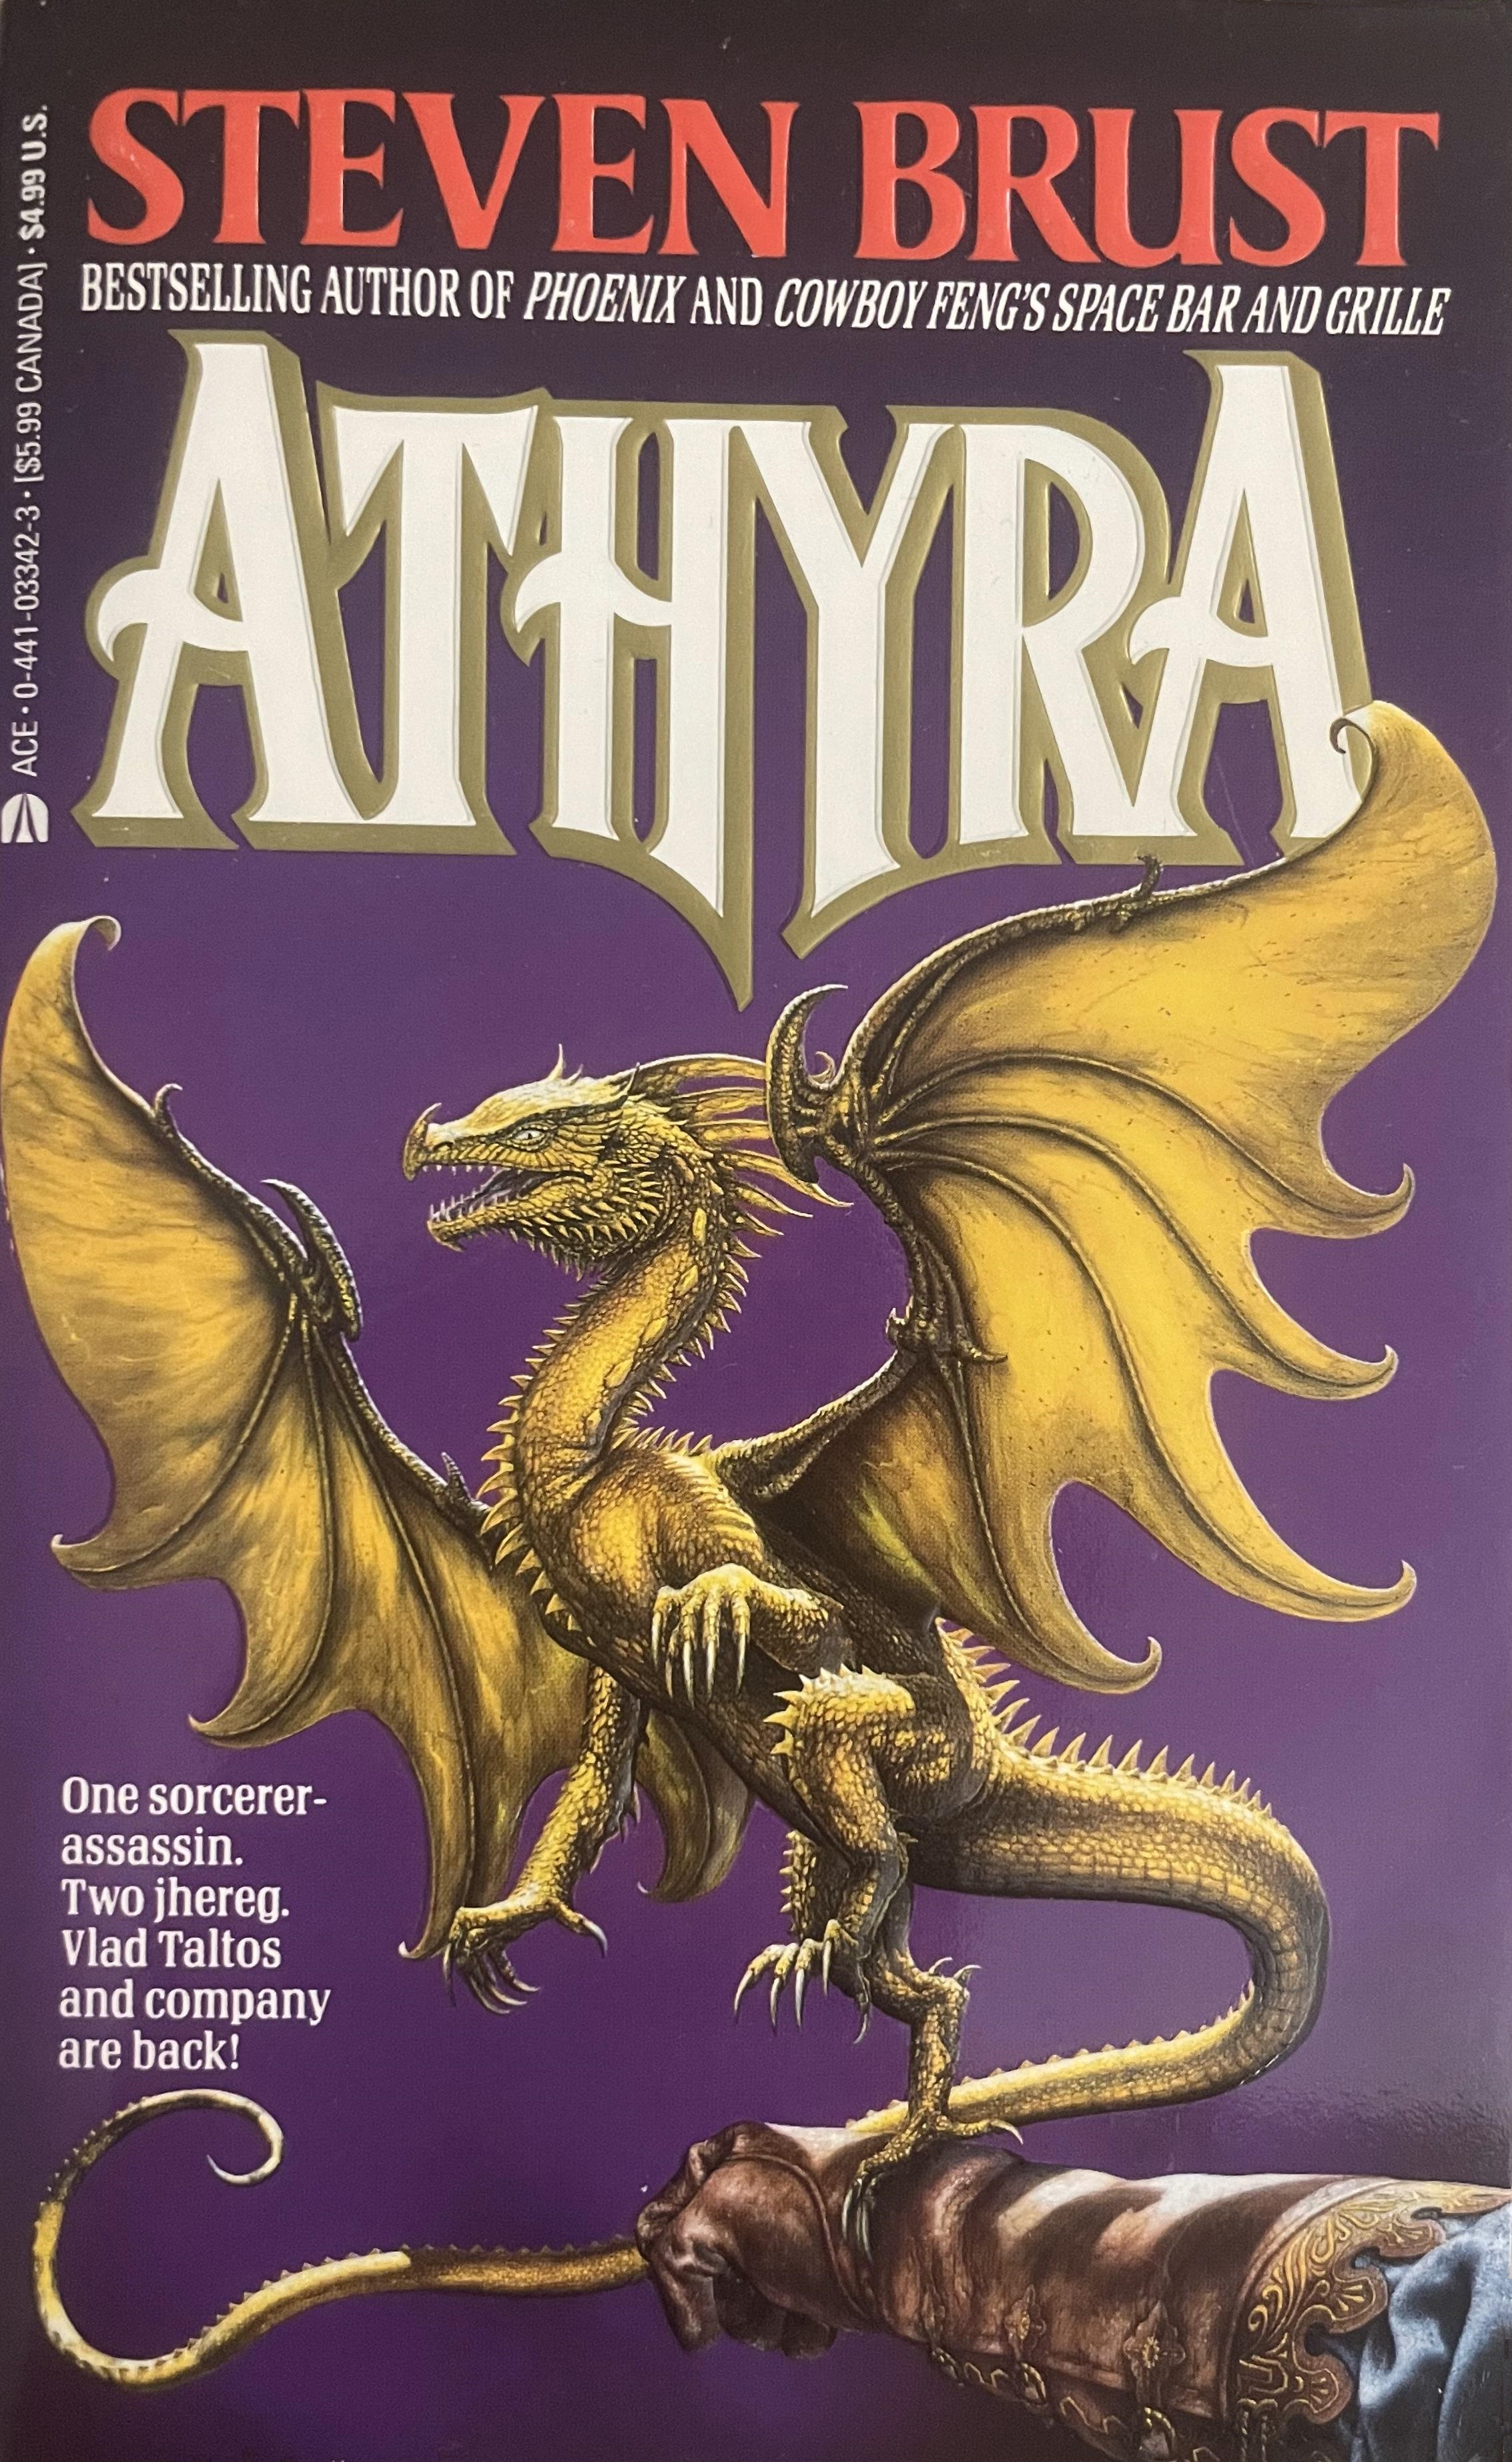 Steven Brust: Athyra (Paperback, 1993, Ace Books)